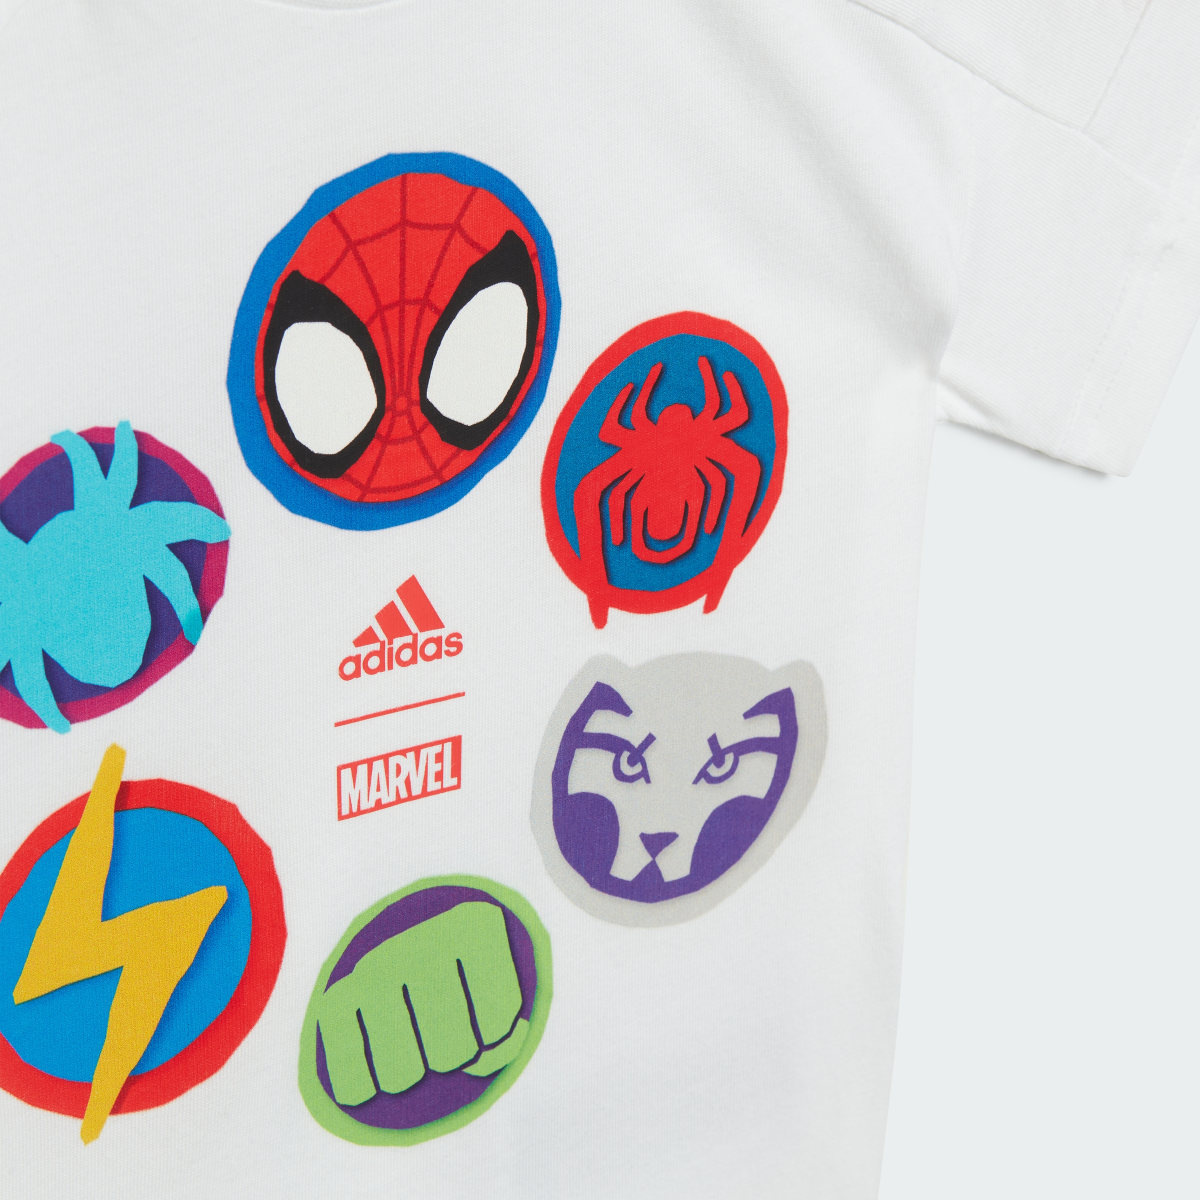 Adidas x Marvel Spider-Man Tişört ve Şort Takımı. 8